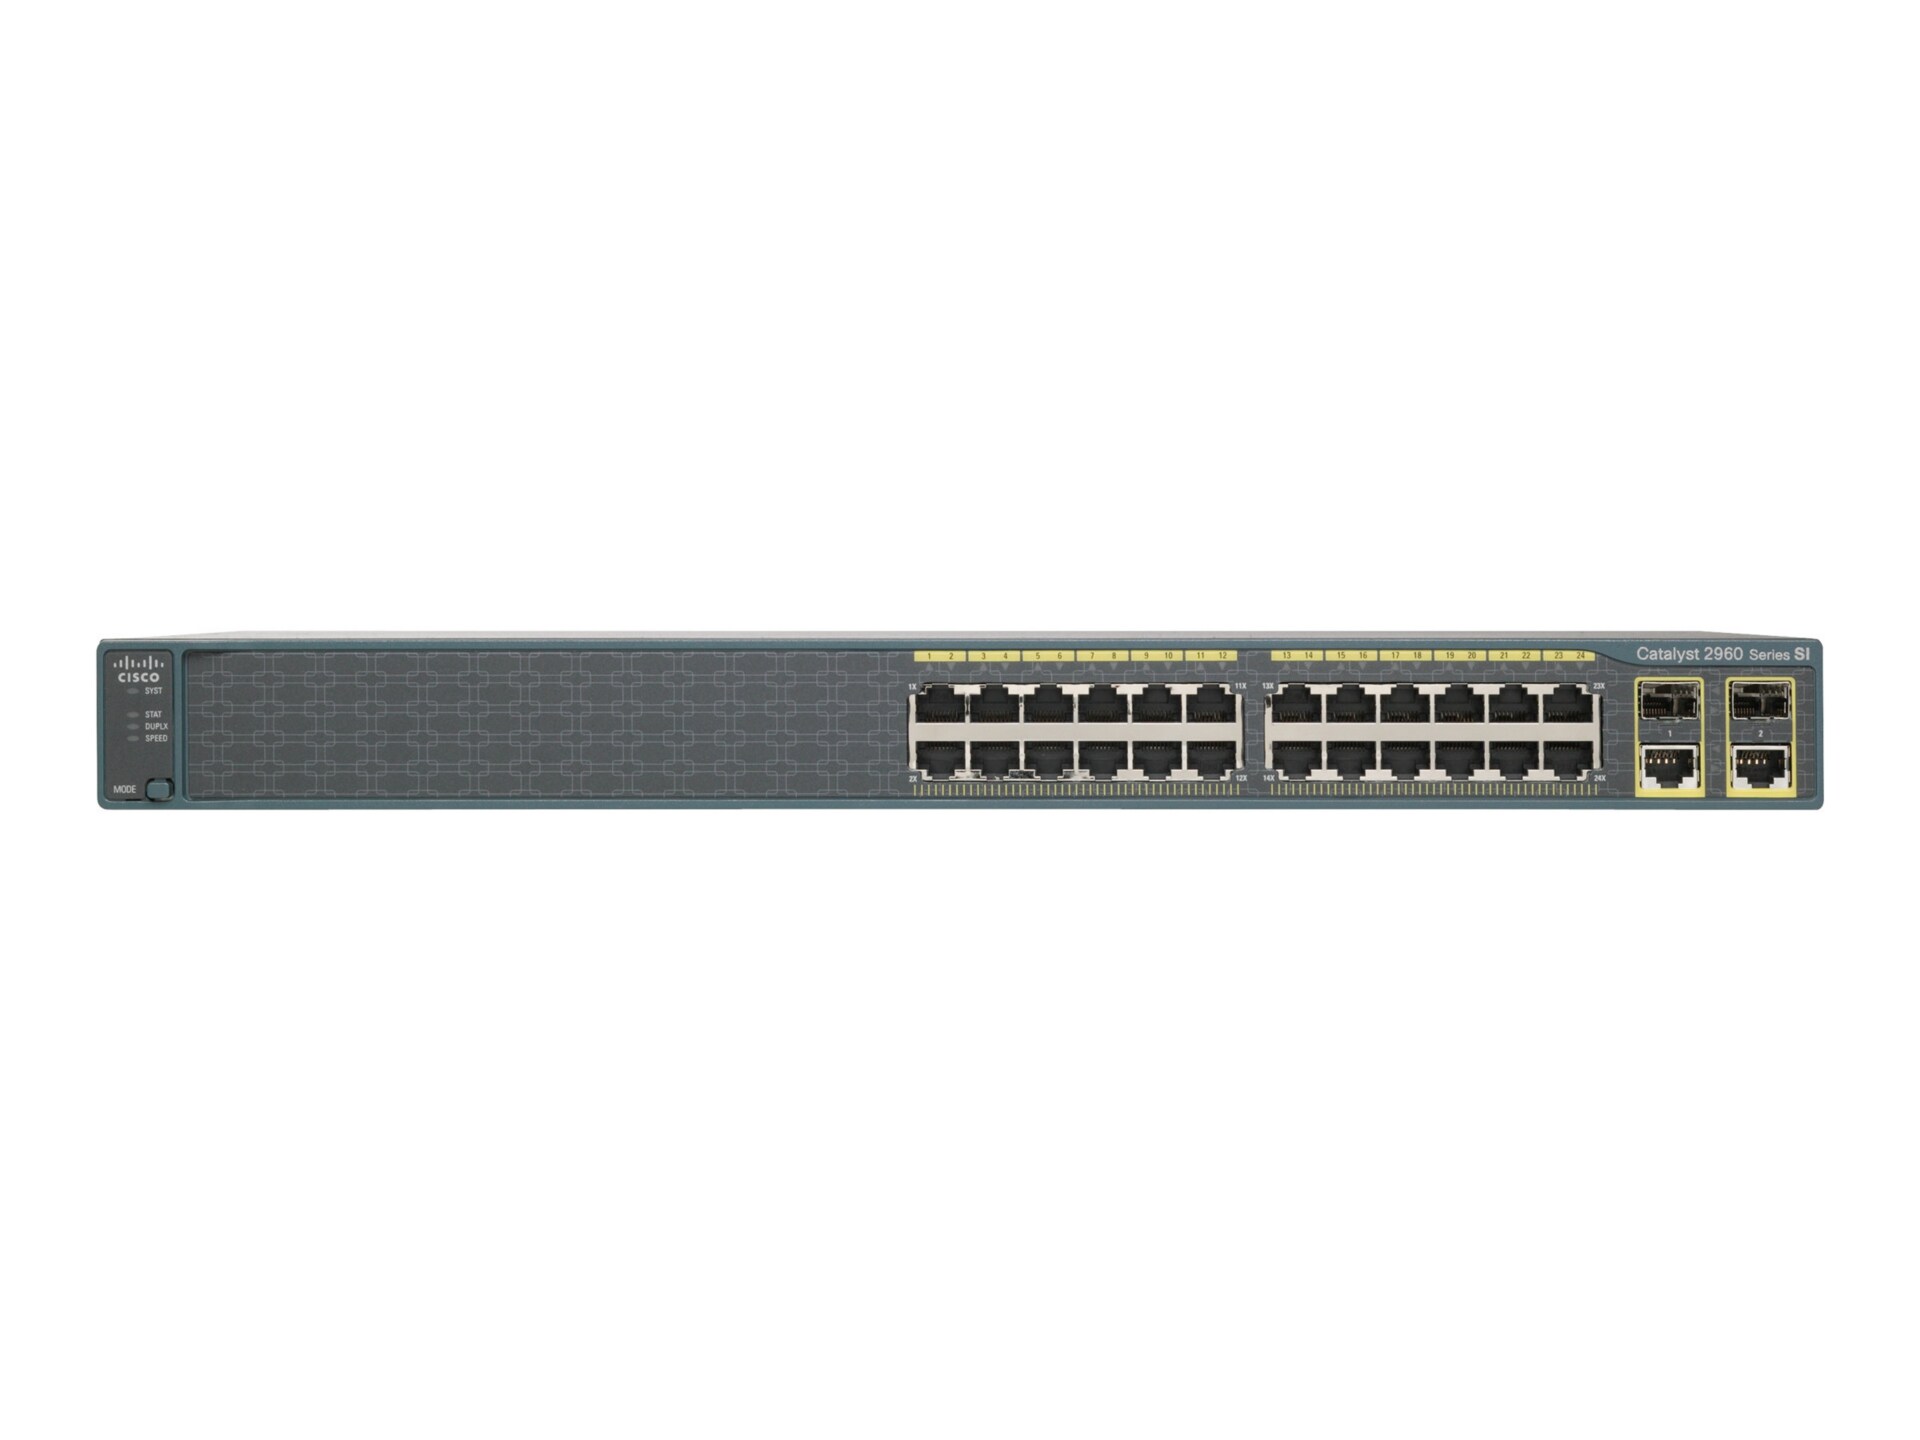 Cisco Catalyst 2960-Plus 24TC-S - switch - 24 ports - managed - rack-mountable